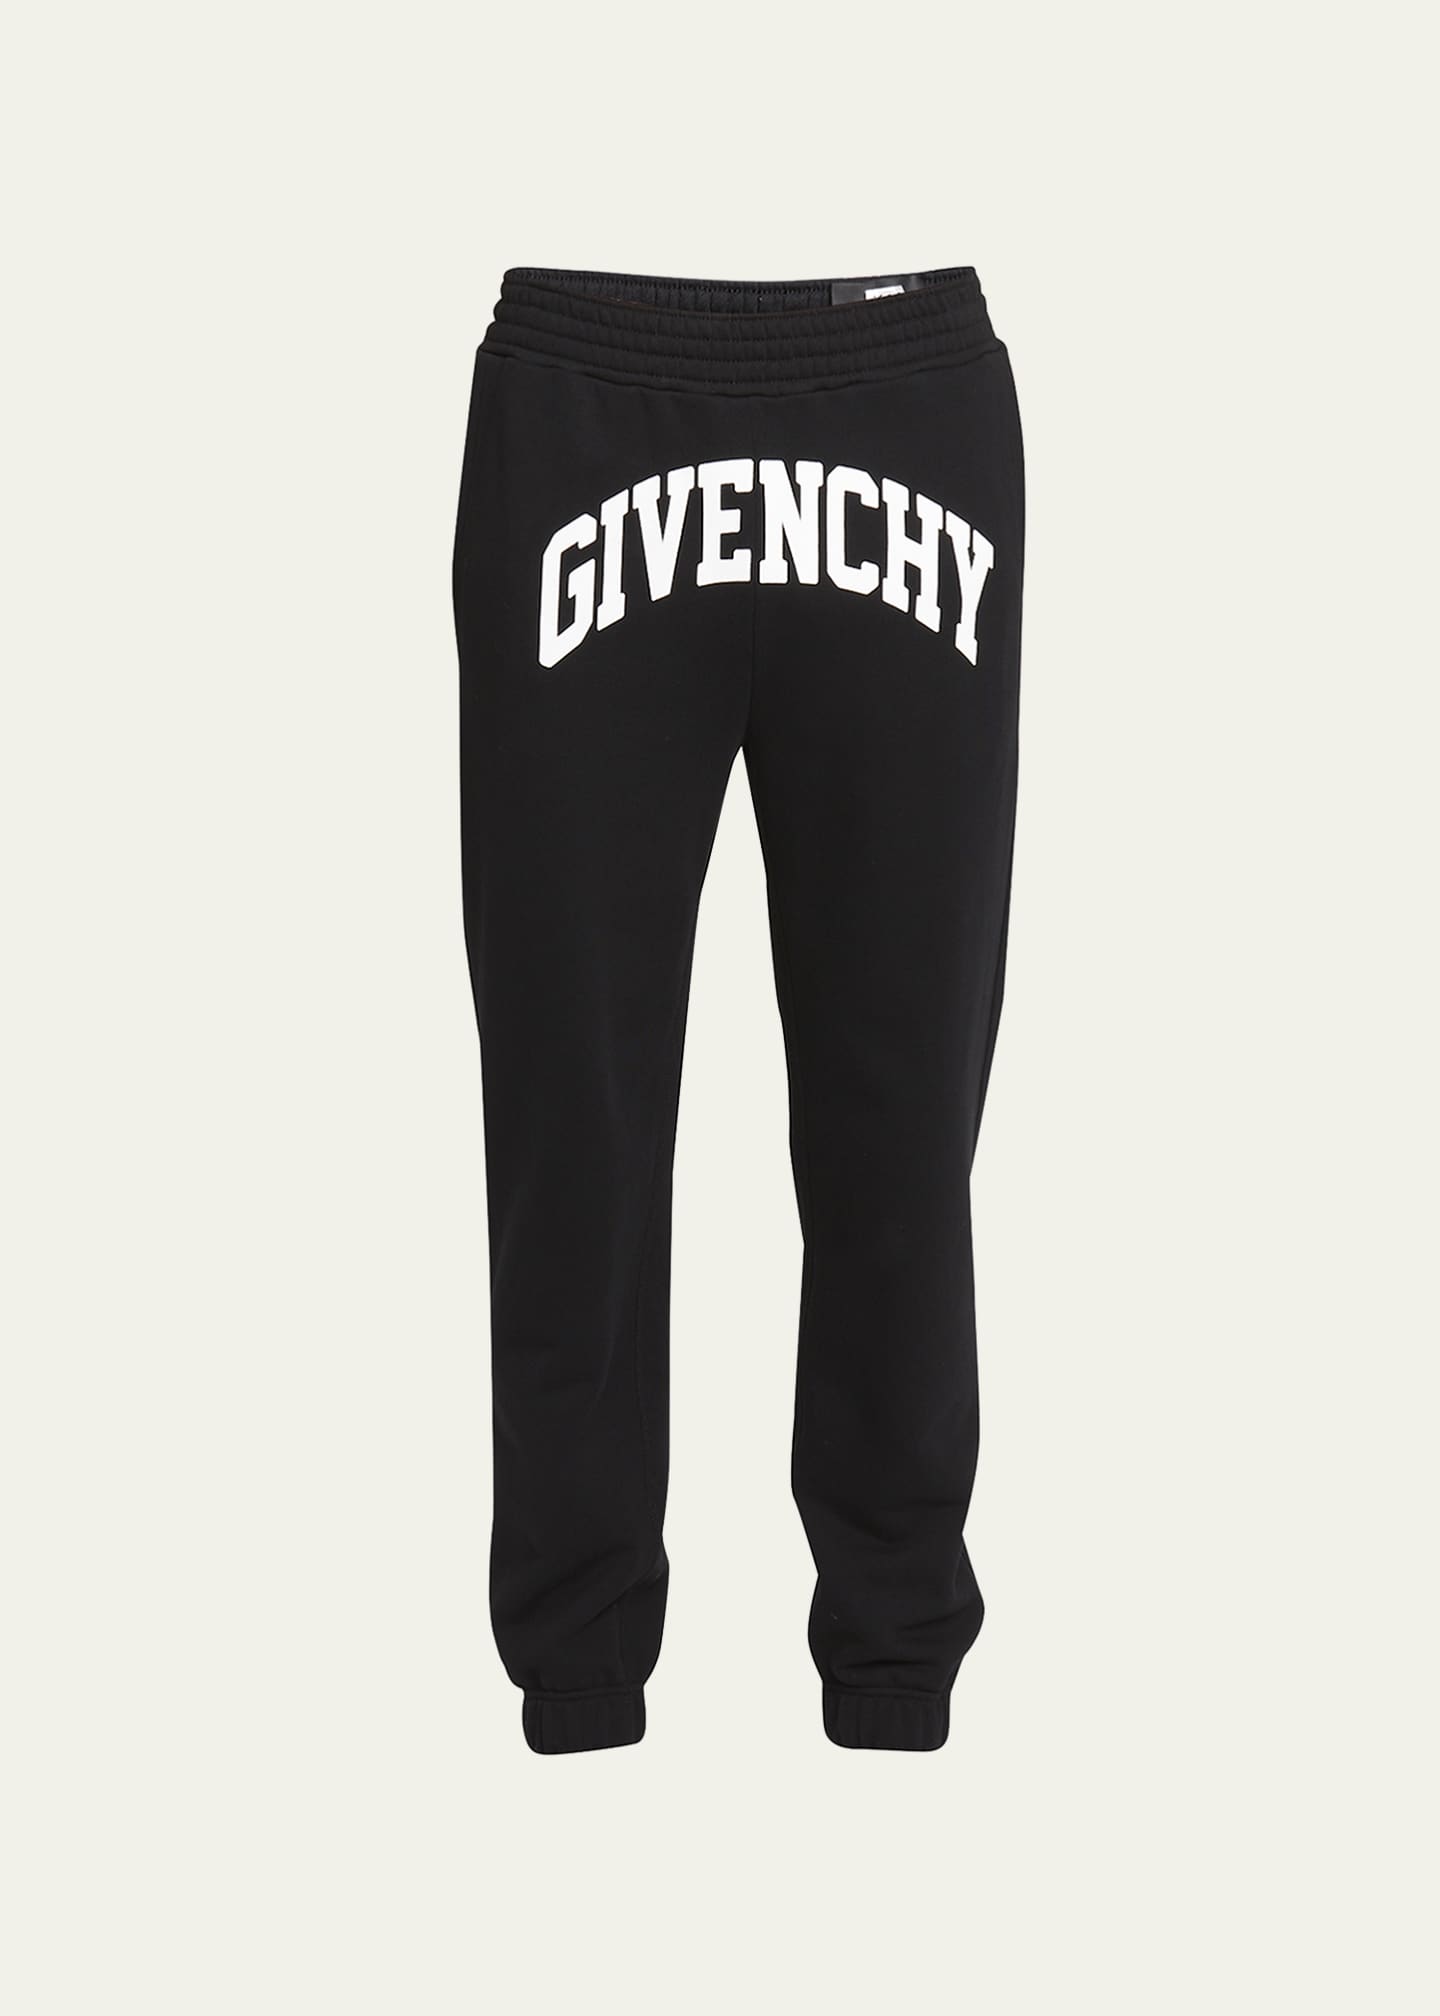 GIVENCHY, Black Men's Casual Pants